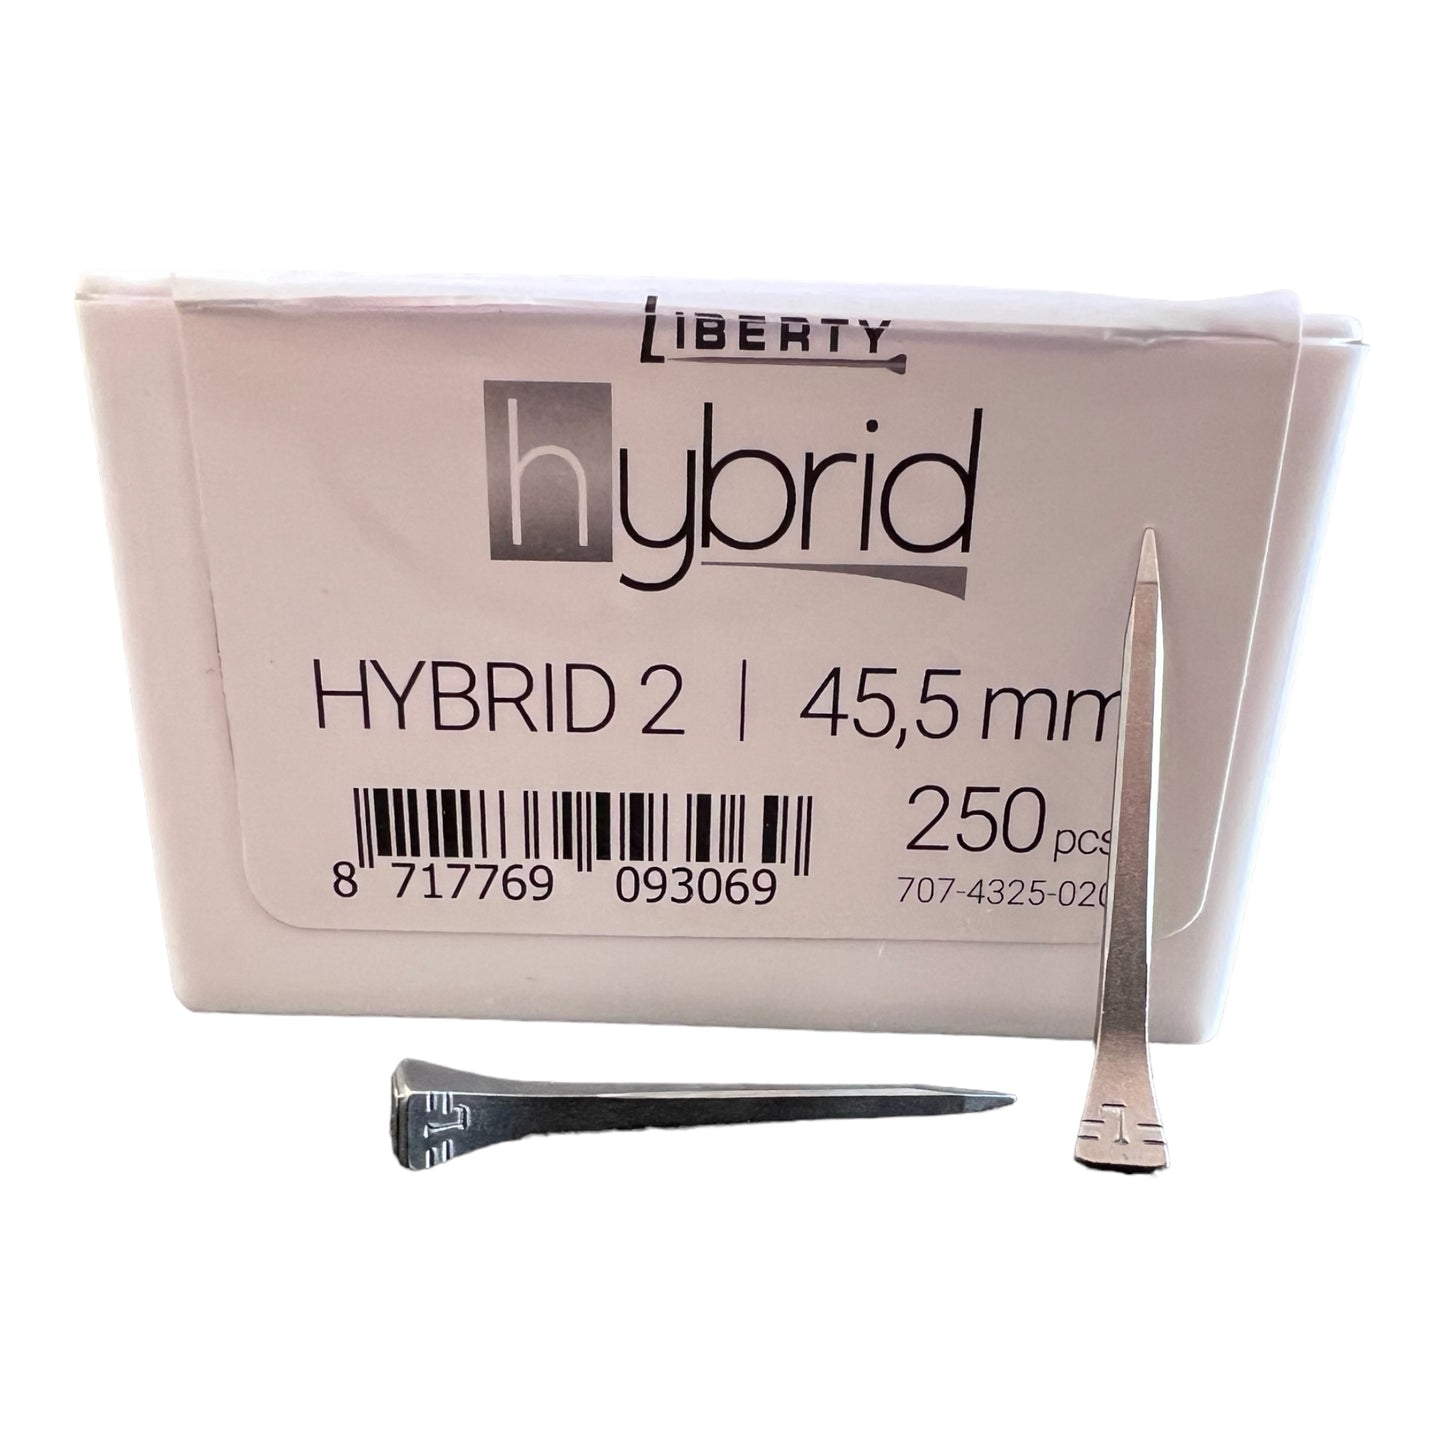 LIBERTY HYBRID 2 NAILS 250PCS